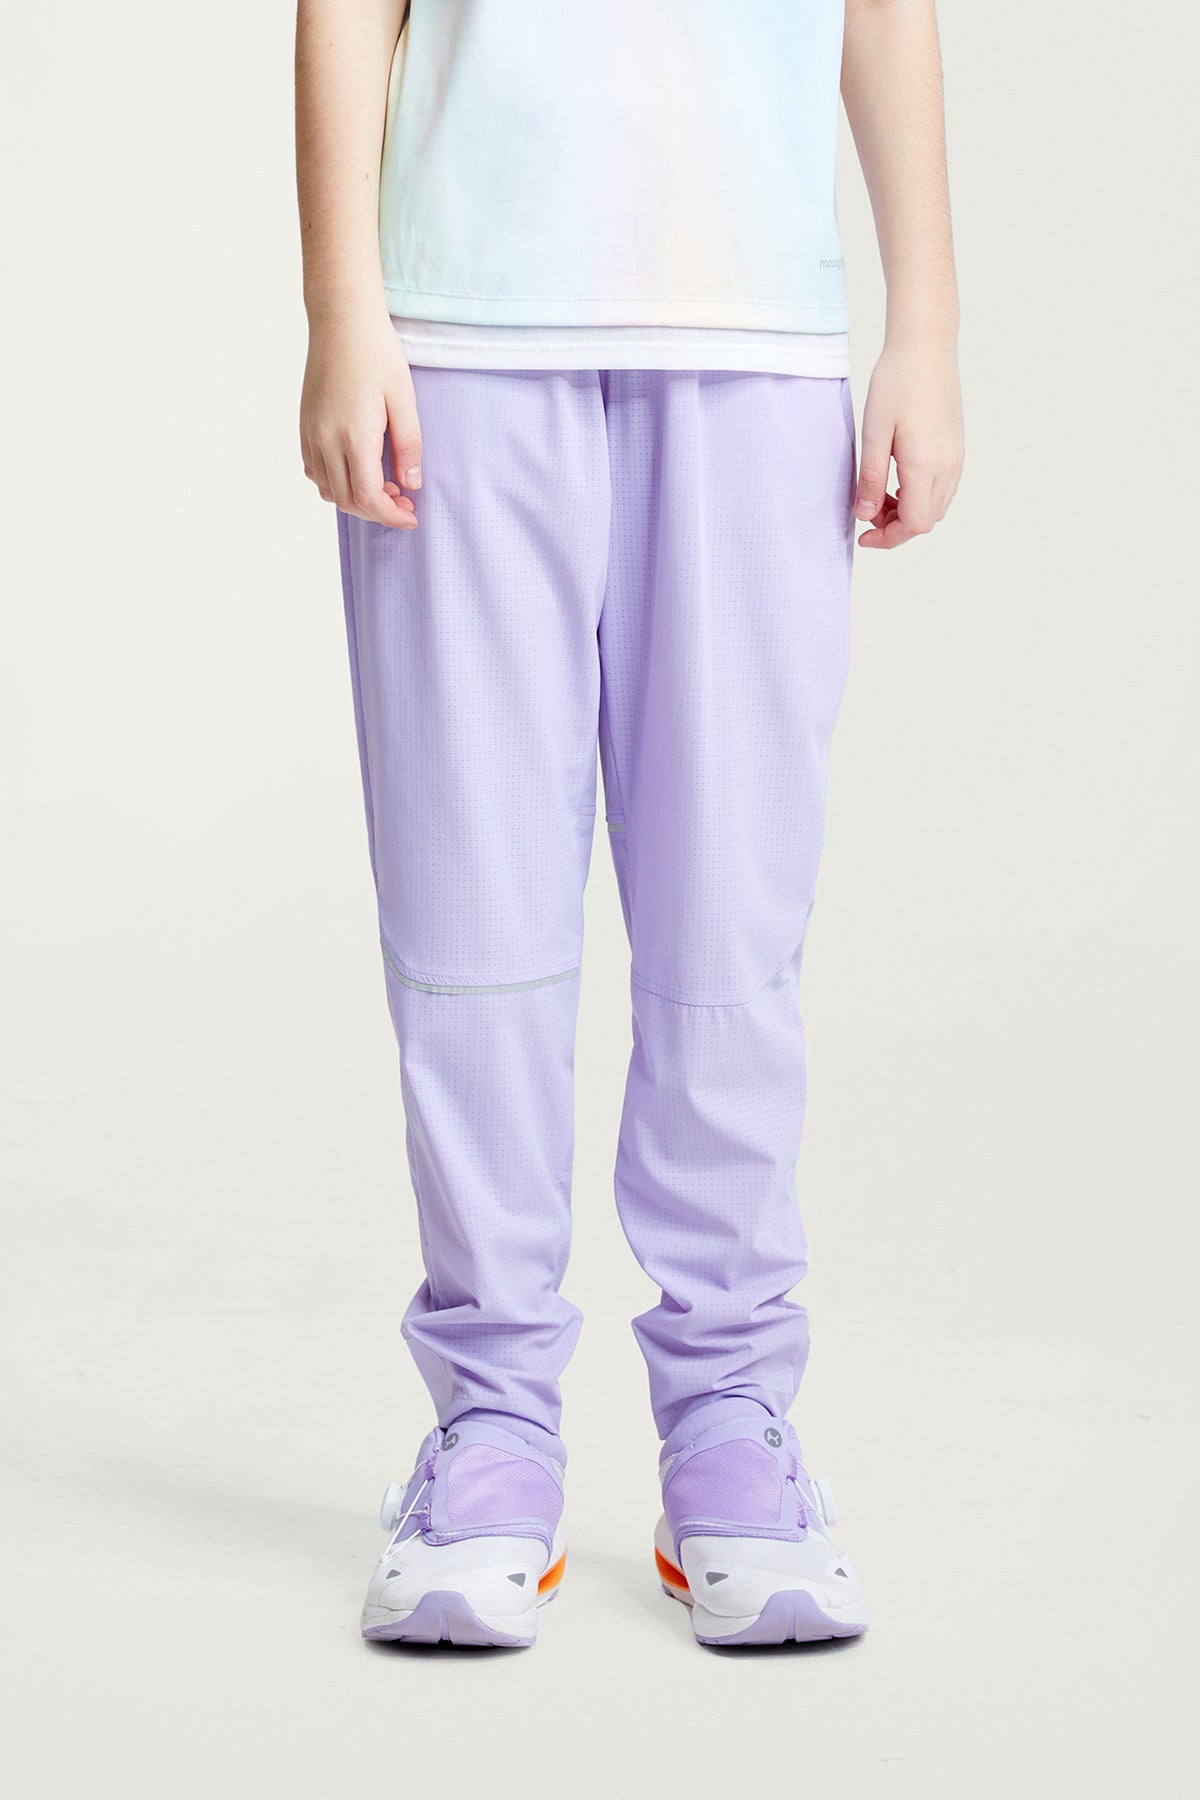 Air Supply Pants**Lavender**